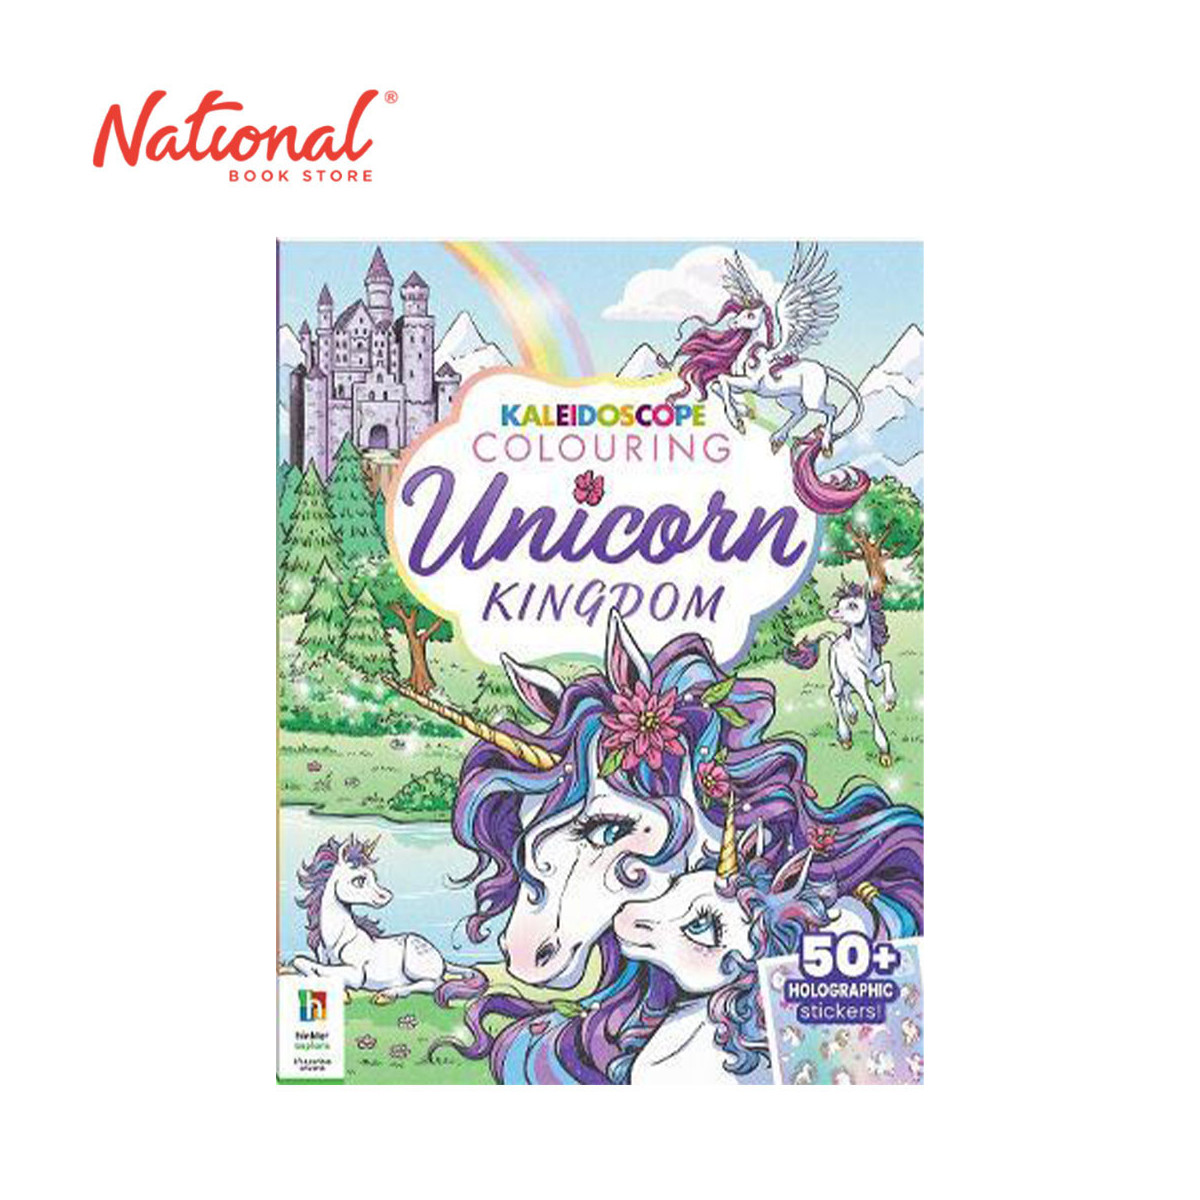 Kaleidoscope Sticker Colouring: Unicorn Kingdom - Trade Paperback - Activity for Kids